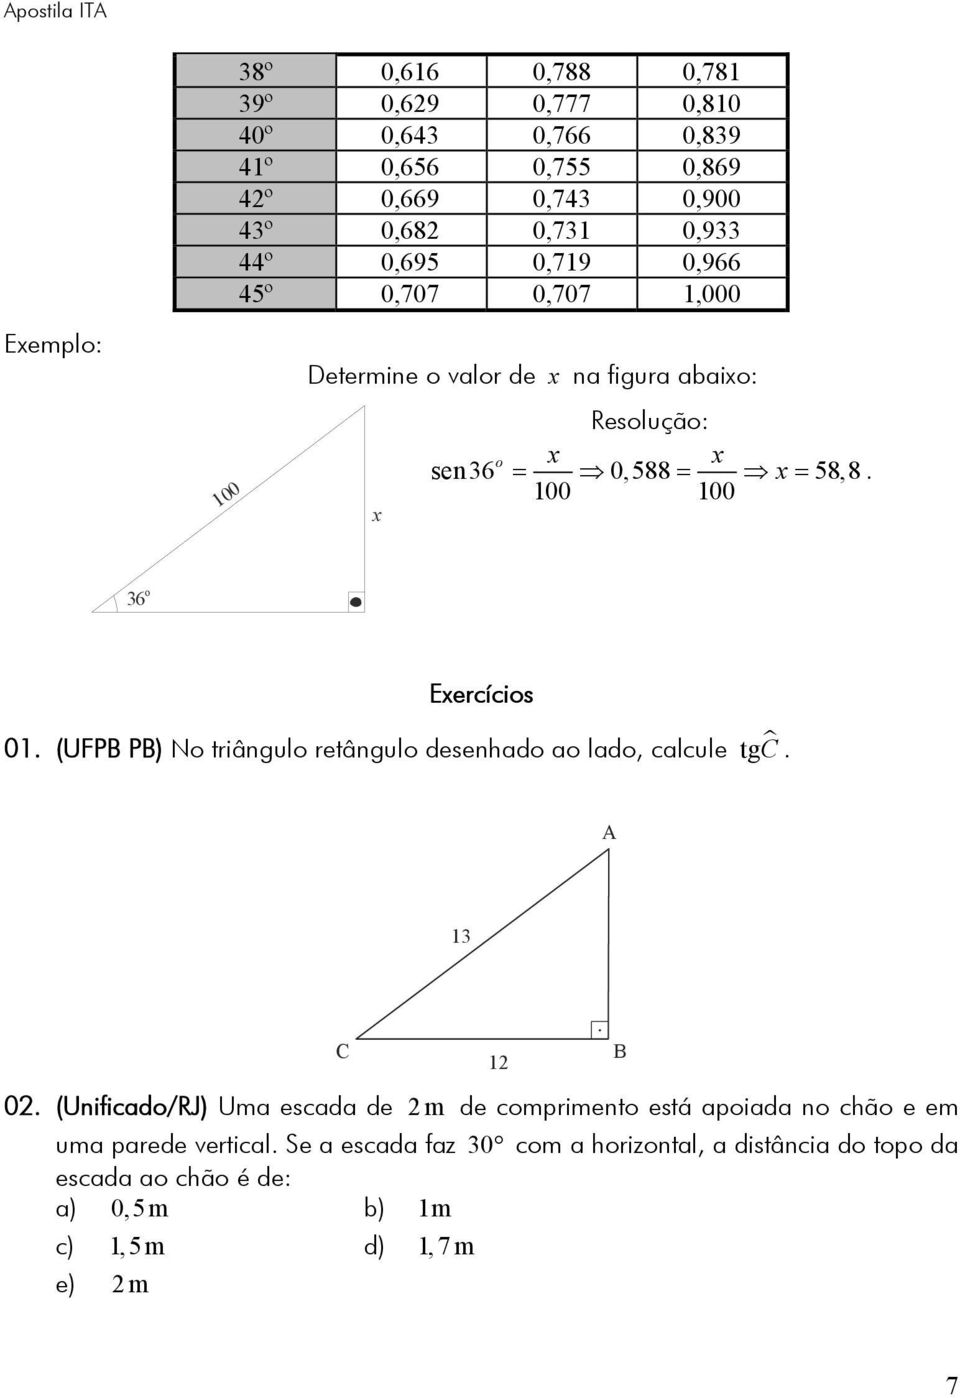 00 00 6 Exercícis 0. (UFP P) N triângul retângul desenhad a lad, calcule tgc. A C 0.